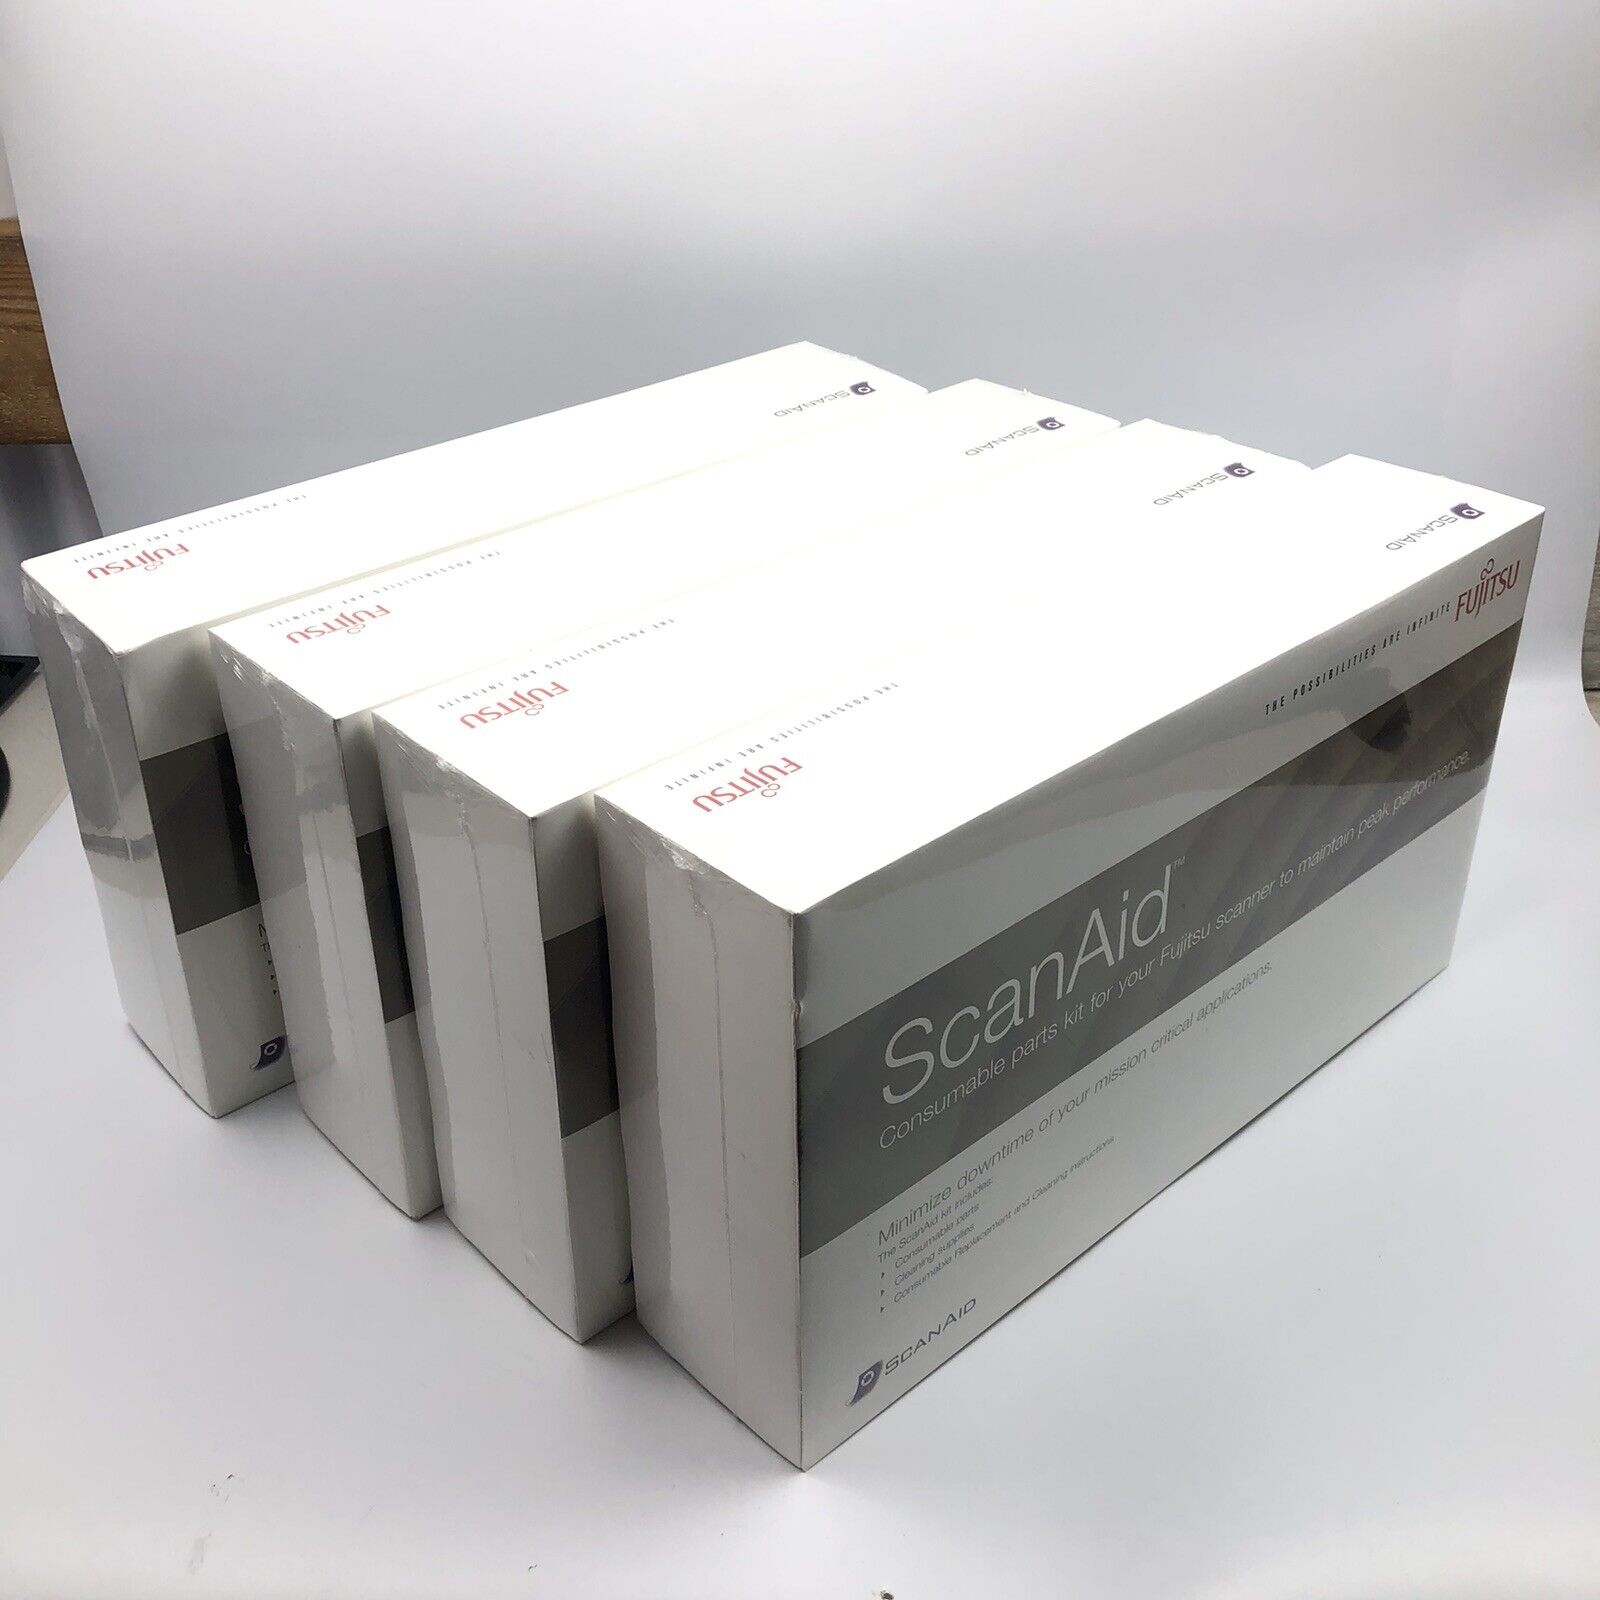 Fujitsu ScanAid - CG01000-524801 - Lot of 4 - New Unopened